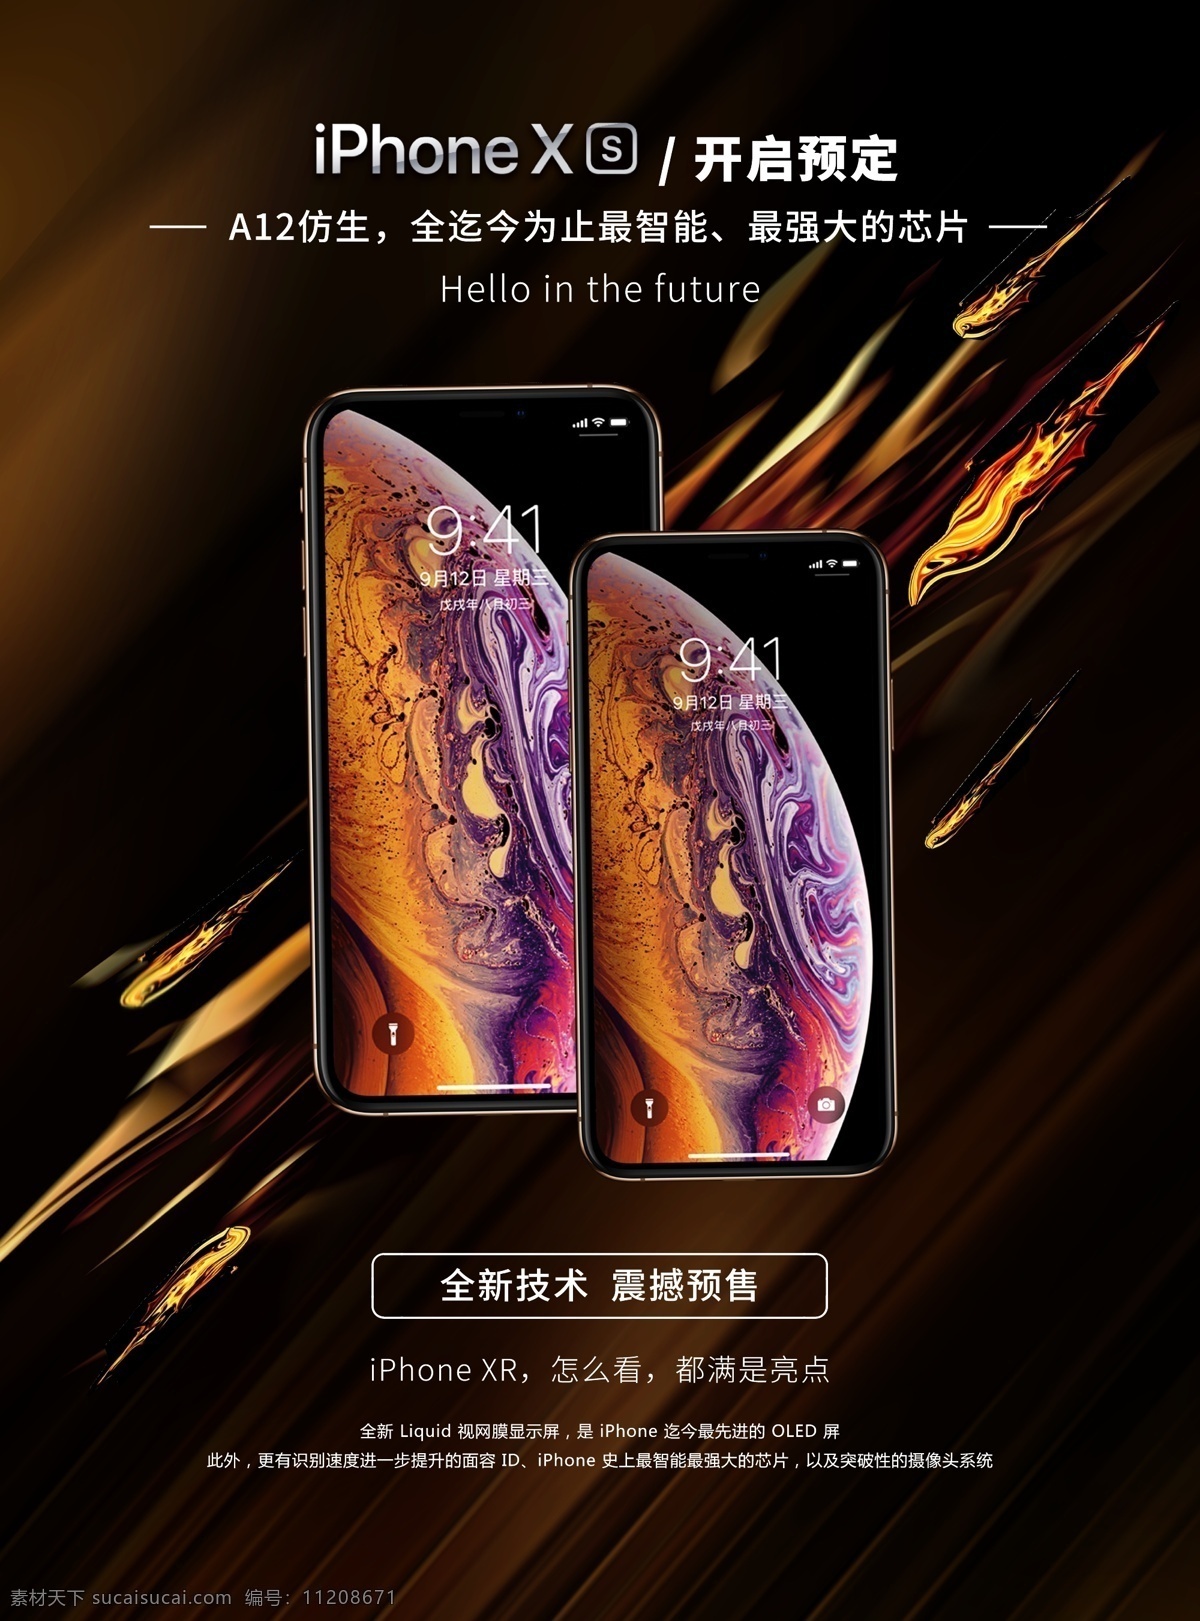 iphonexs 预售 苹果发布会 预售海报 手机海报 黑色科技 金色动感 现代科技 数码产品